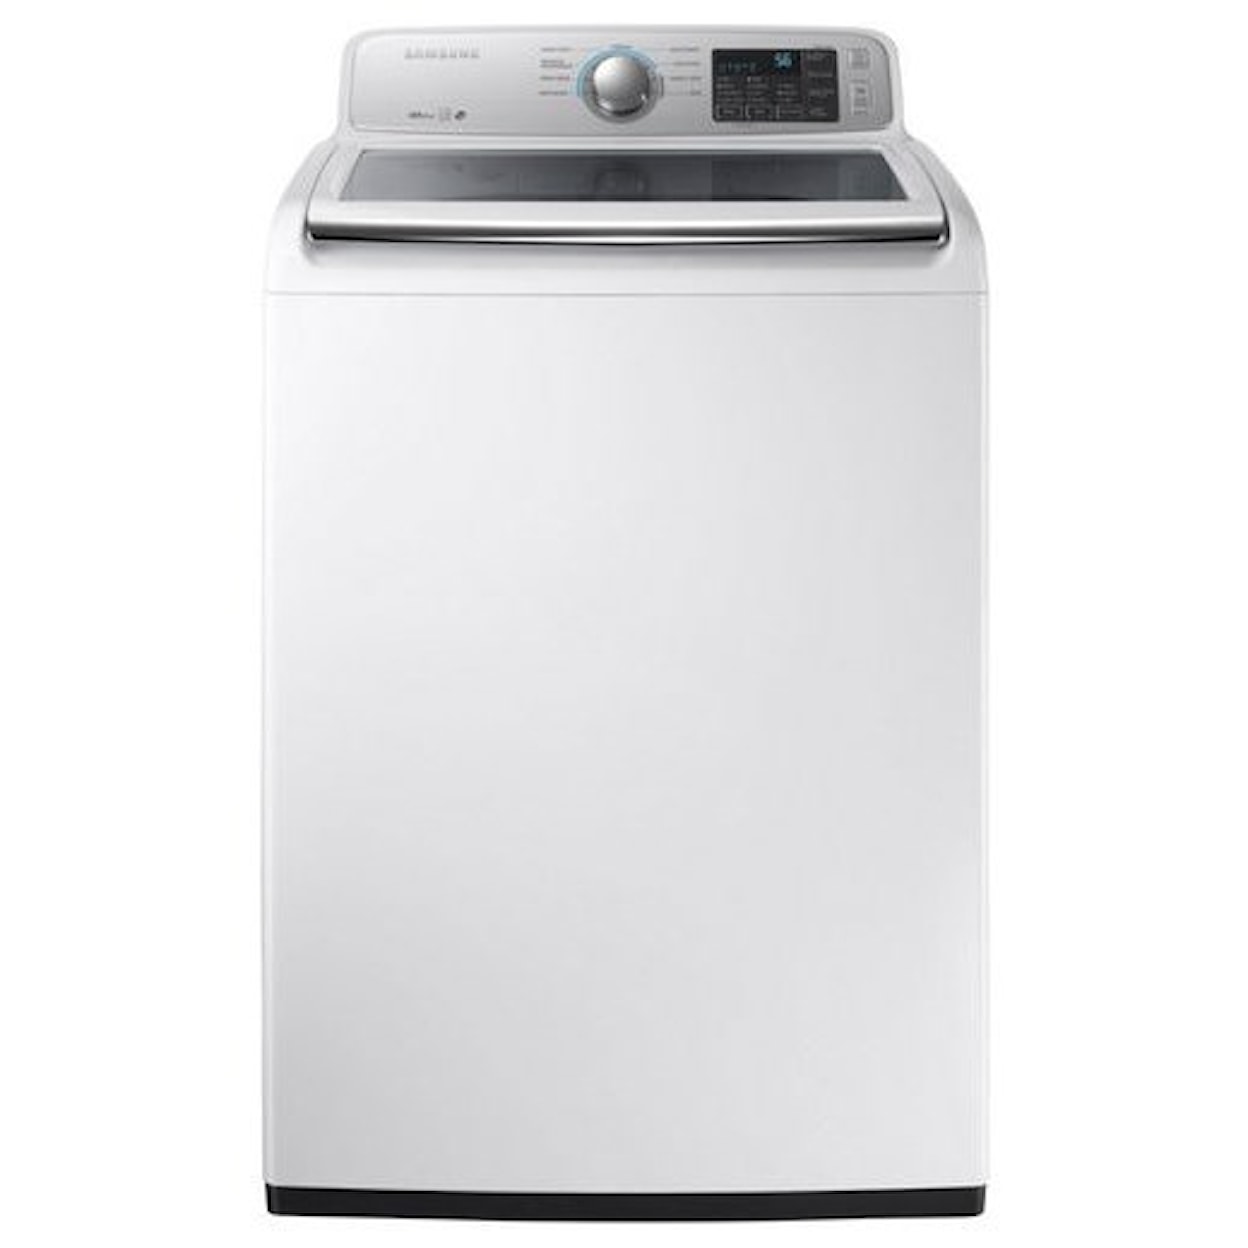 Samsung Appliances Top Load Washers - Samsung WA7050 4.5 cu. ft. Top Load Washer